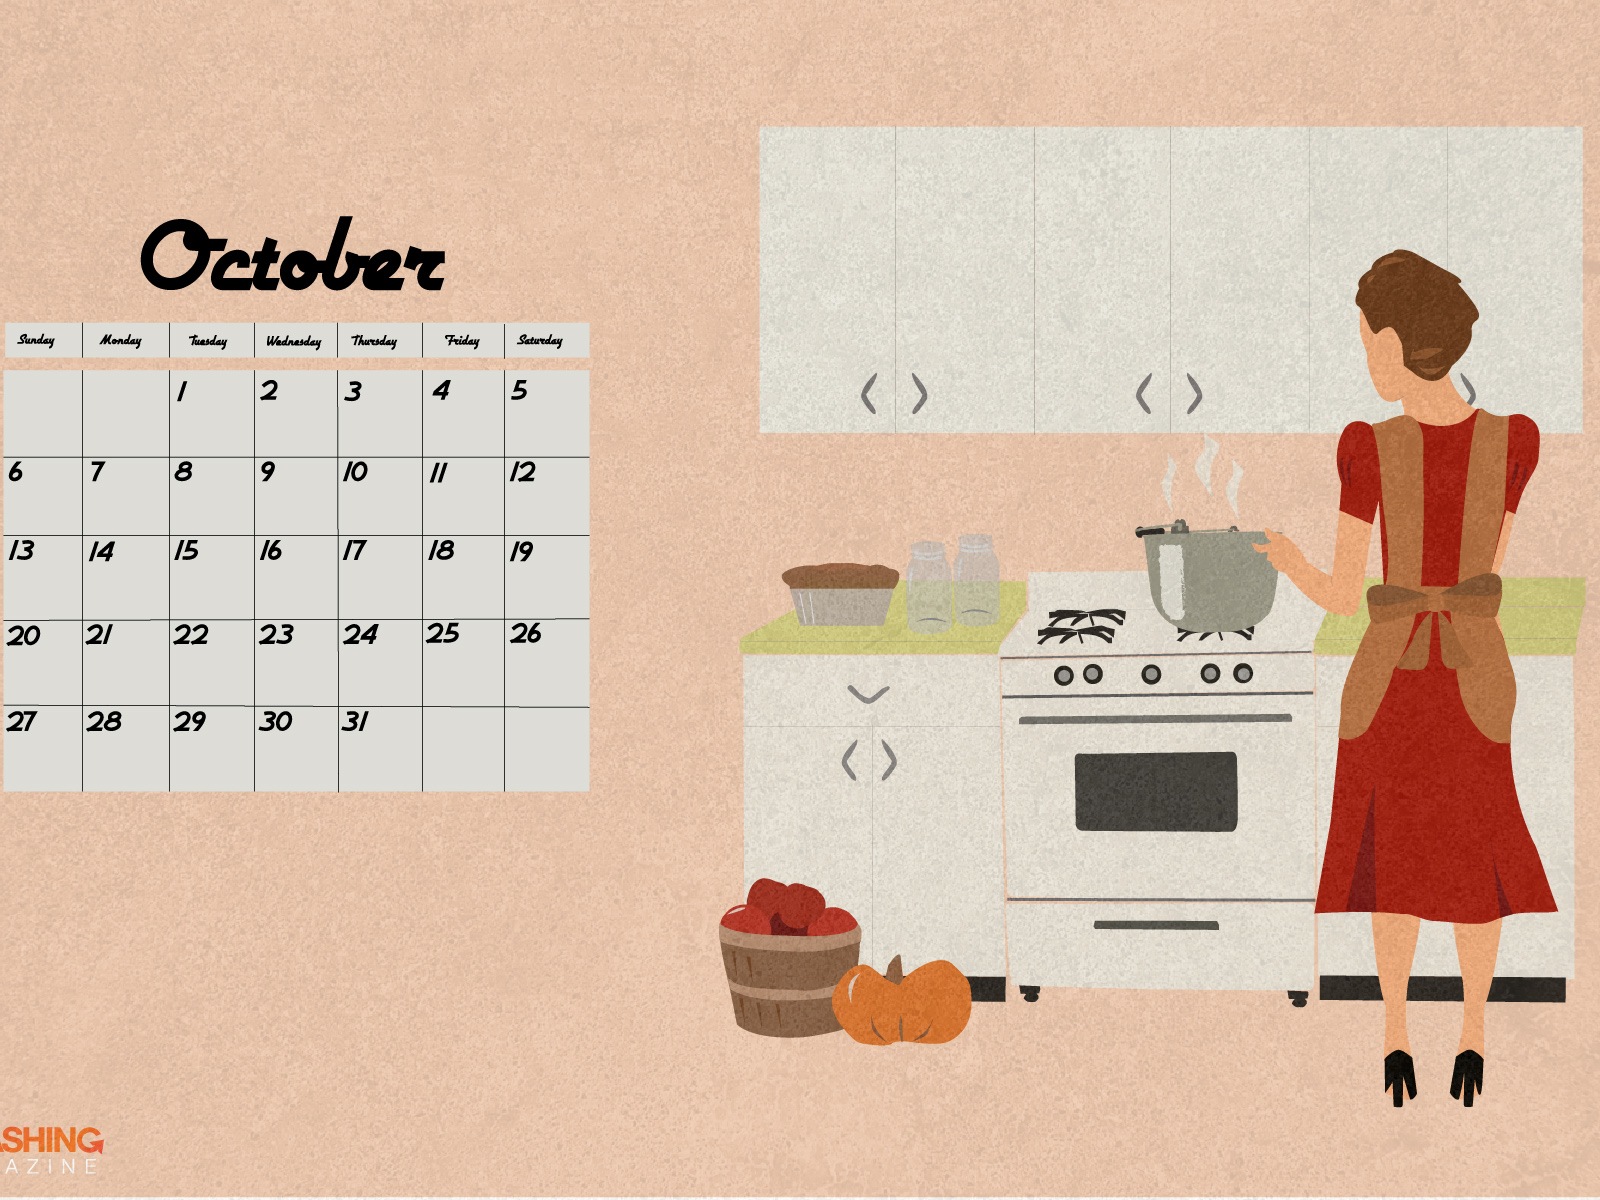 October 2013 calendar wallpaper (2) #17 - 1600x1200